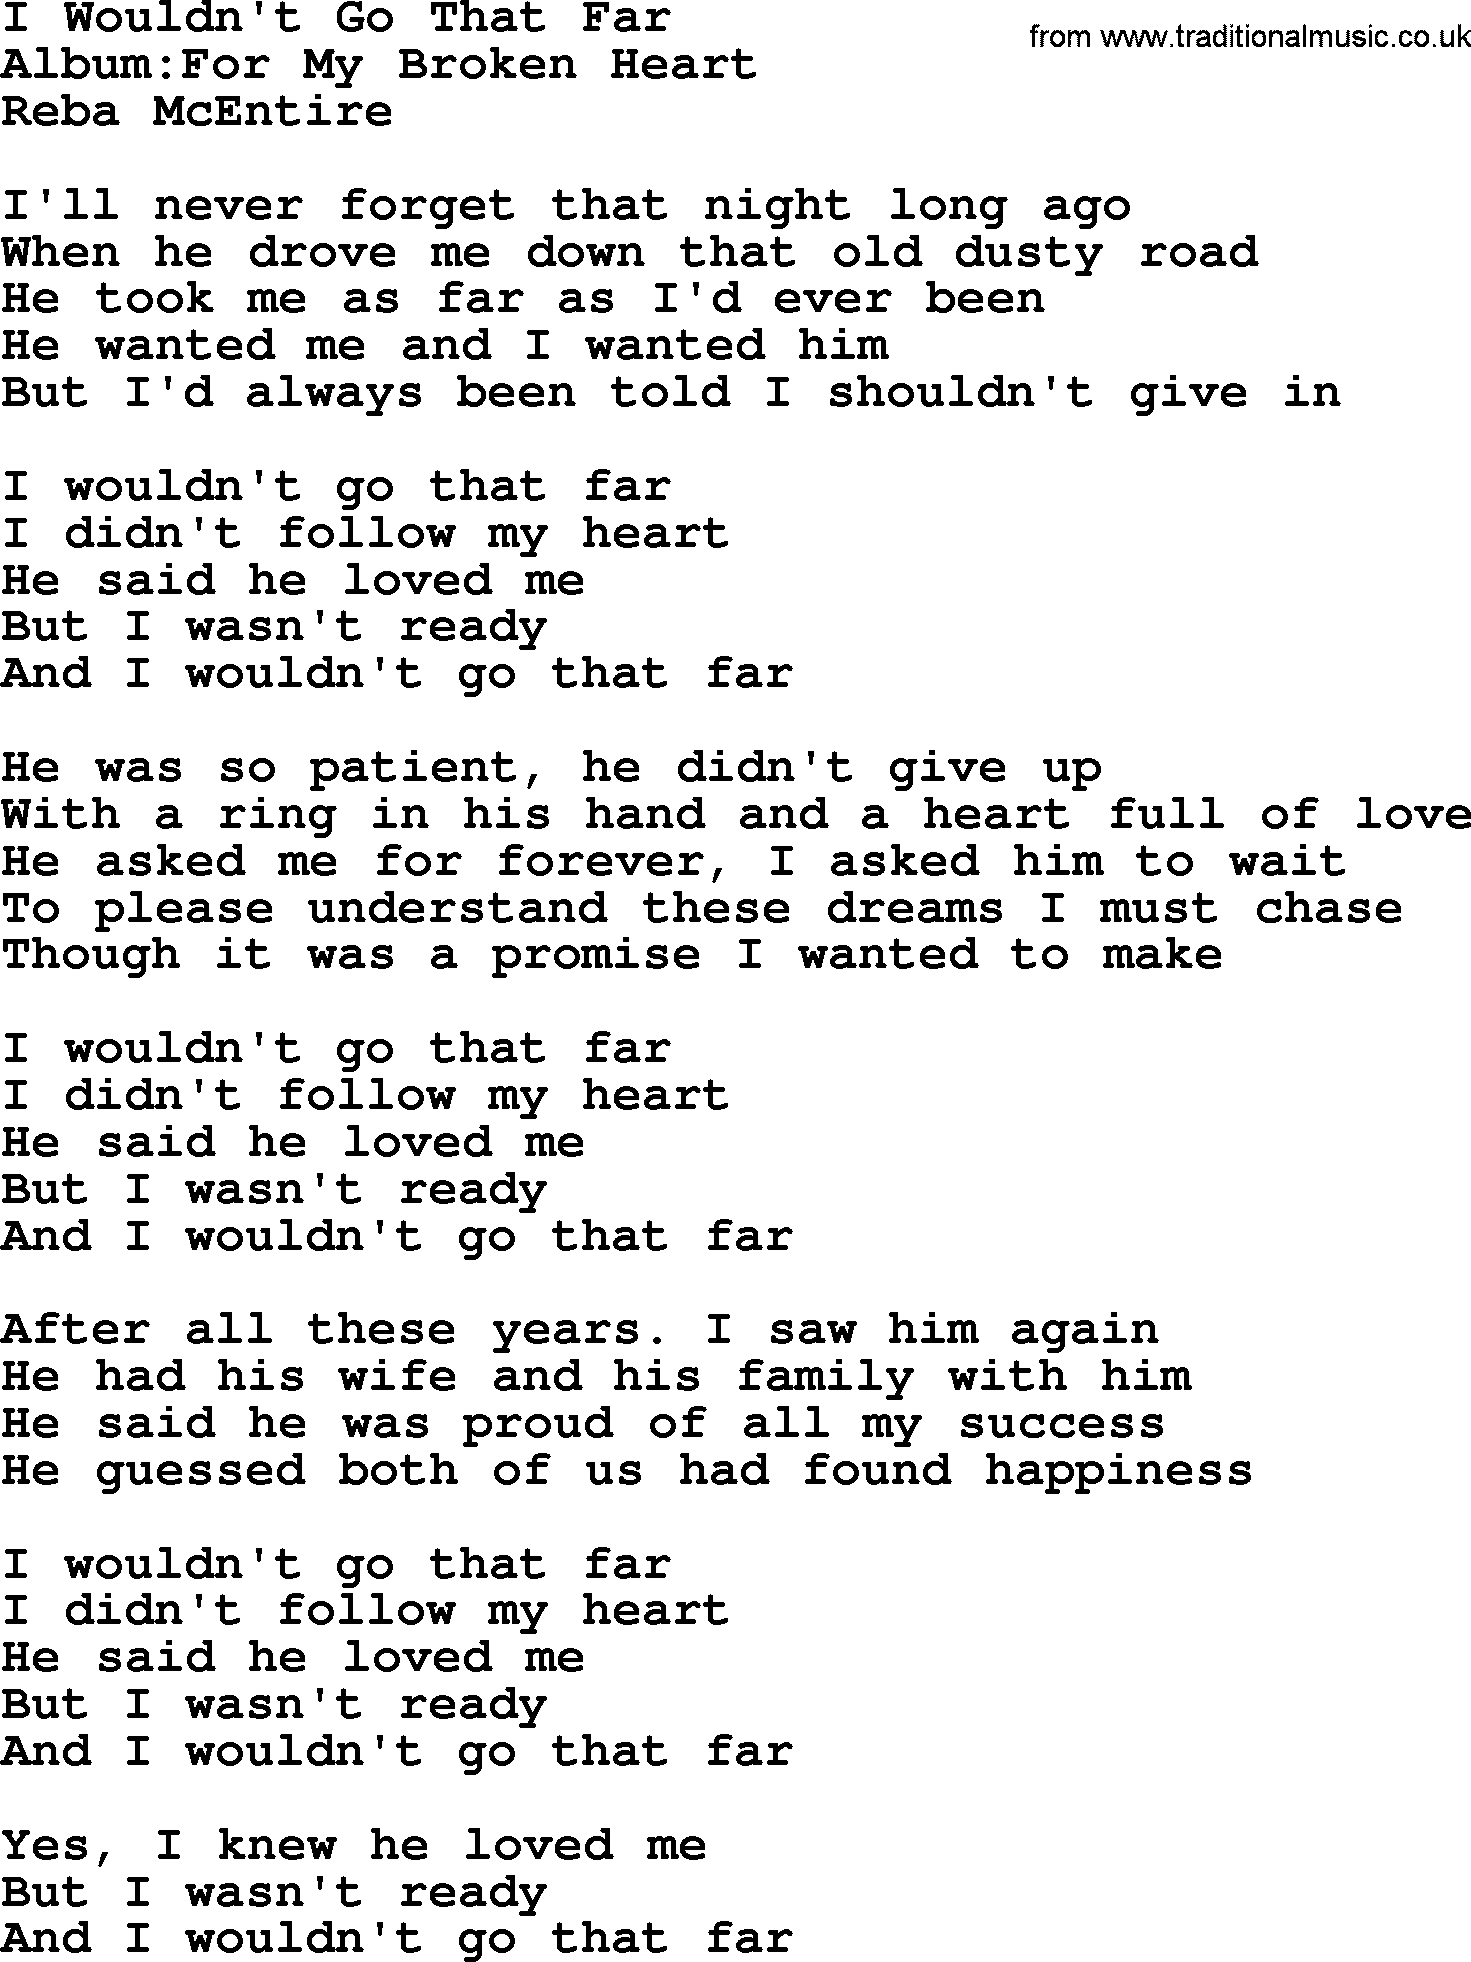 Reba McEntire song: I Wouldn't Go That Far lyrics